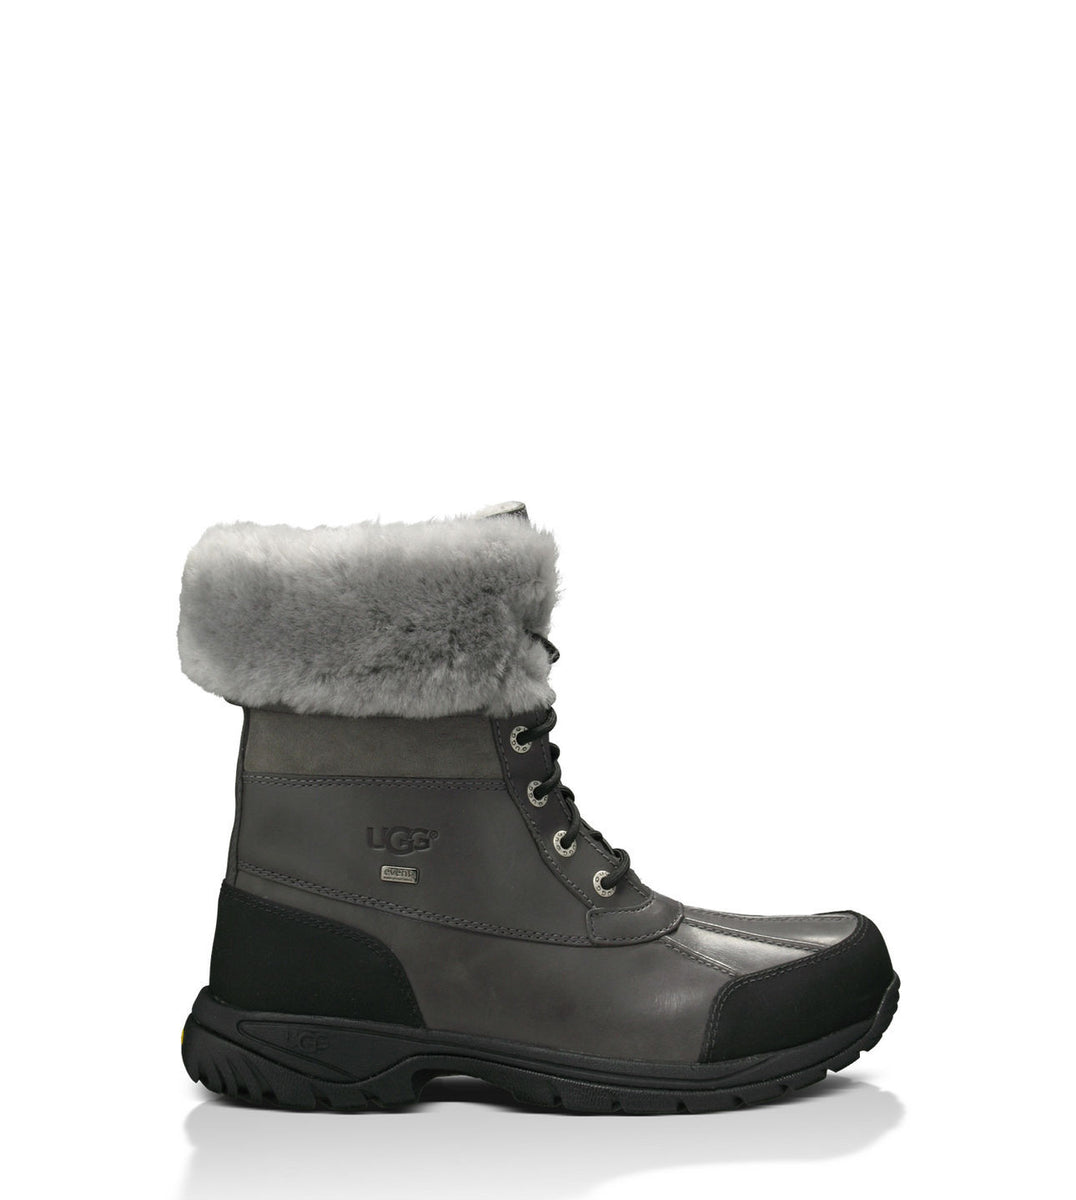 UGG Australia BUTTE 5521 Metal Men's winter boots in Laval